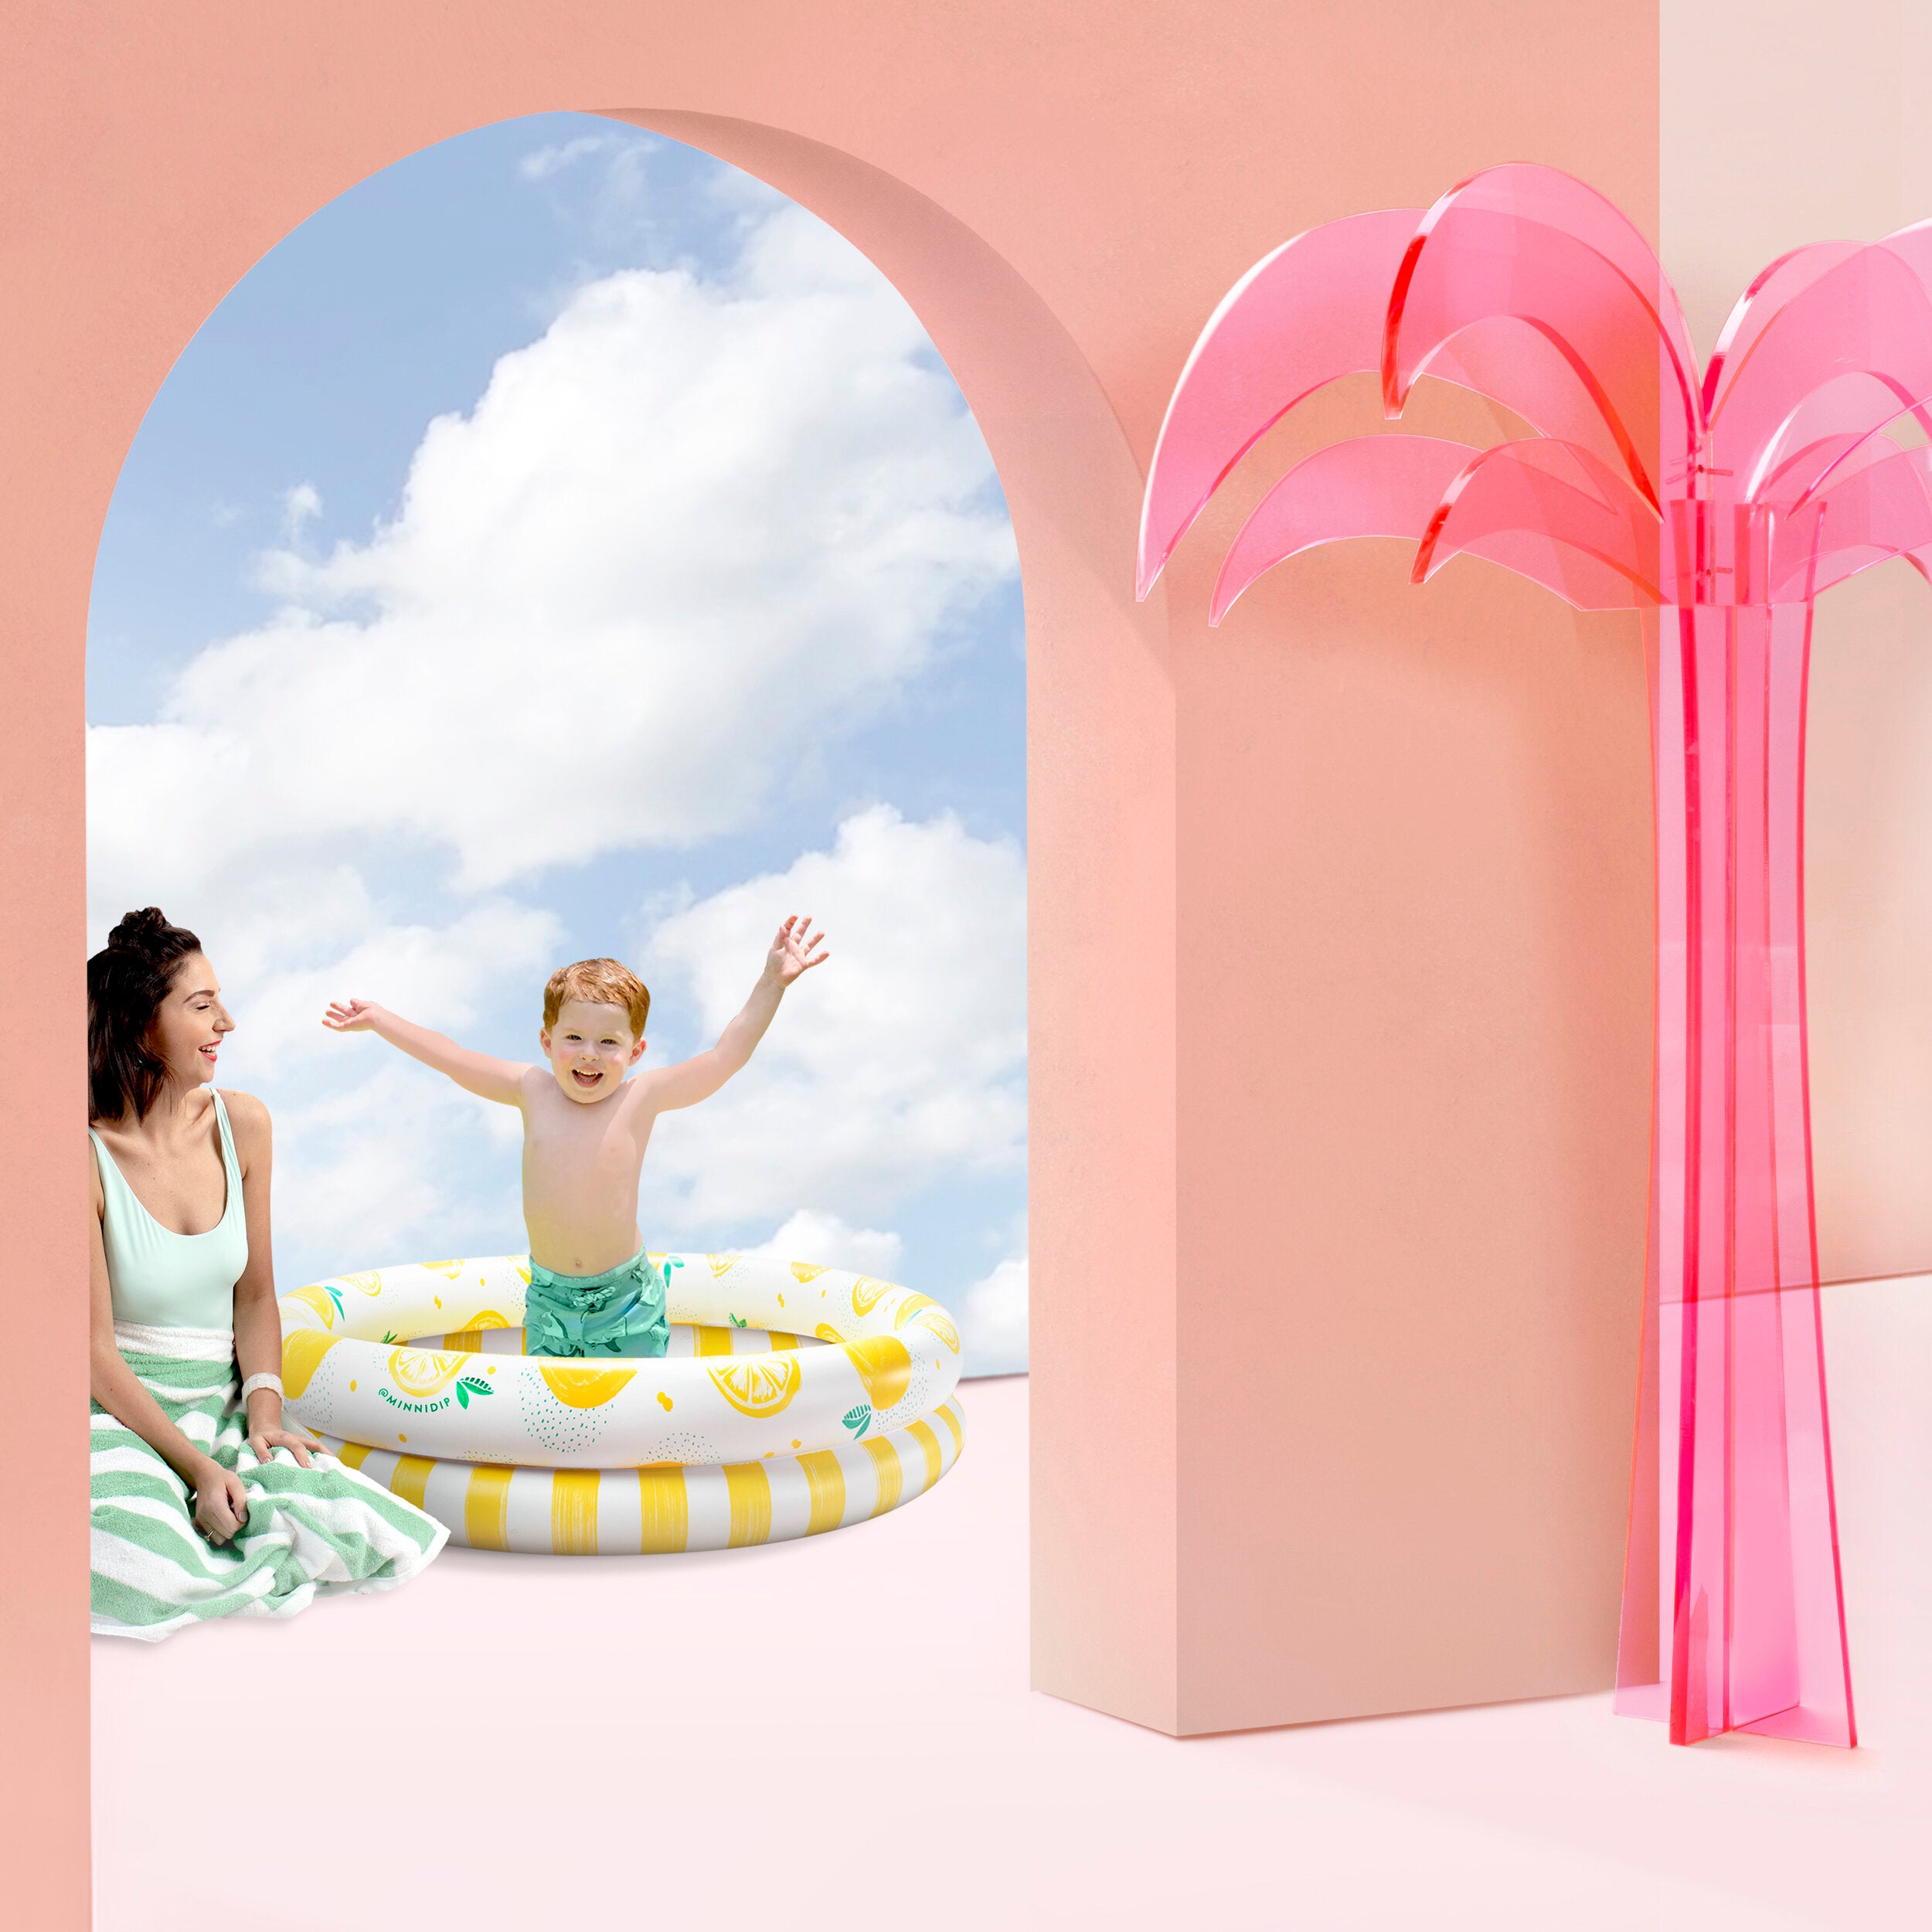 the SPLASH OF CITRUS MINNI-MINNI luxe inflatable pool